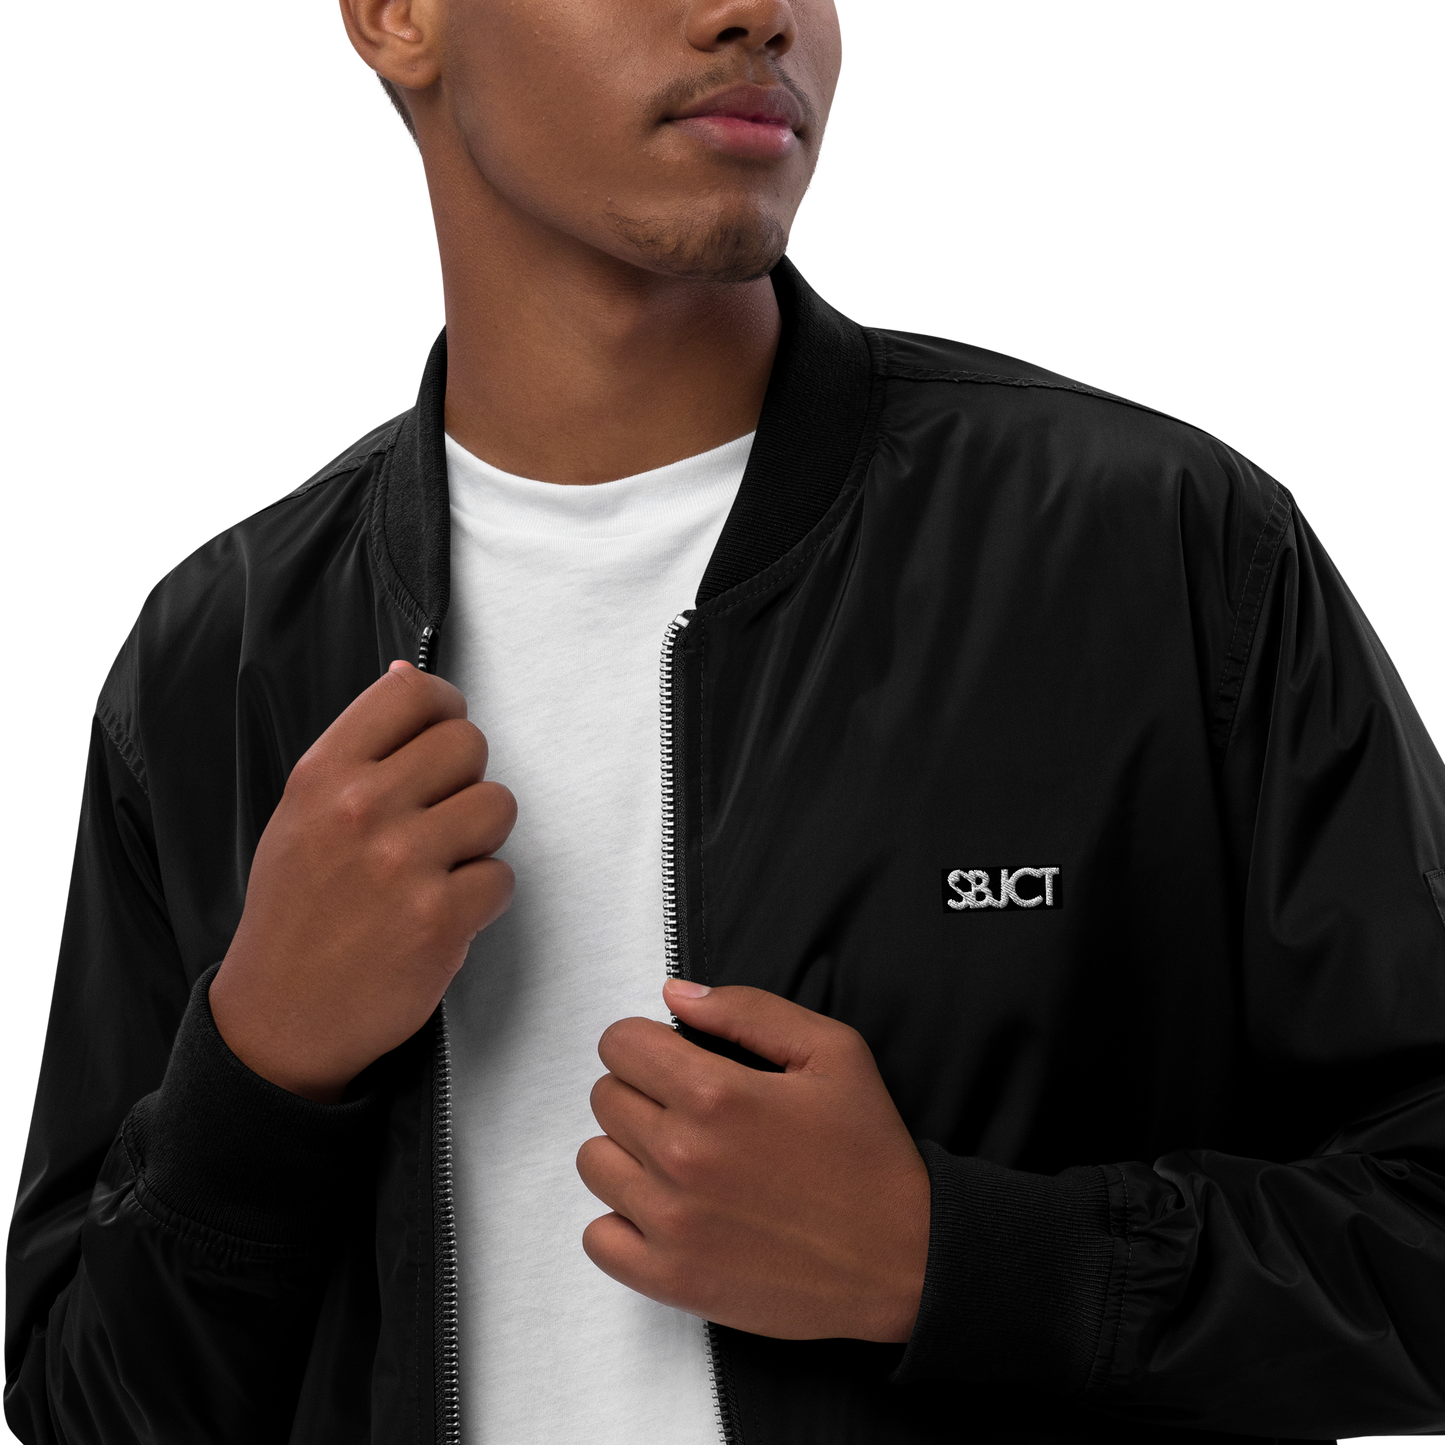 SBJCT Premium recycled bomber jacket